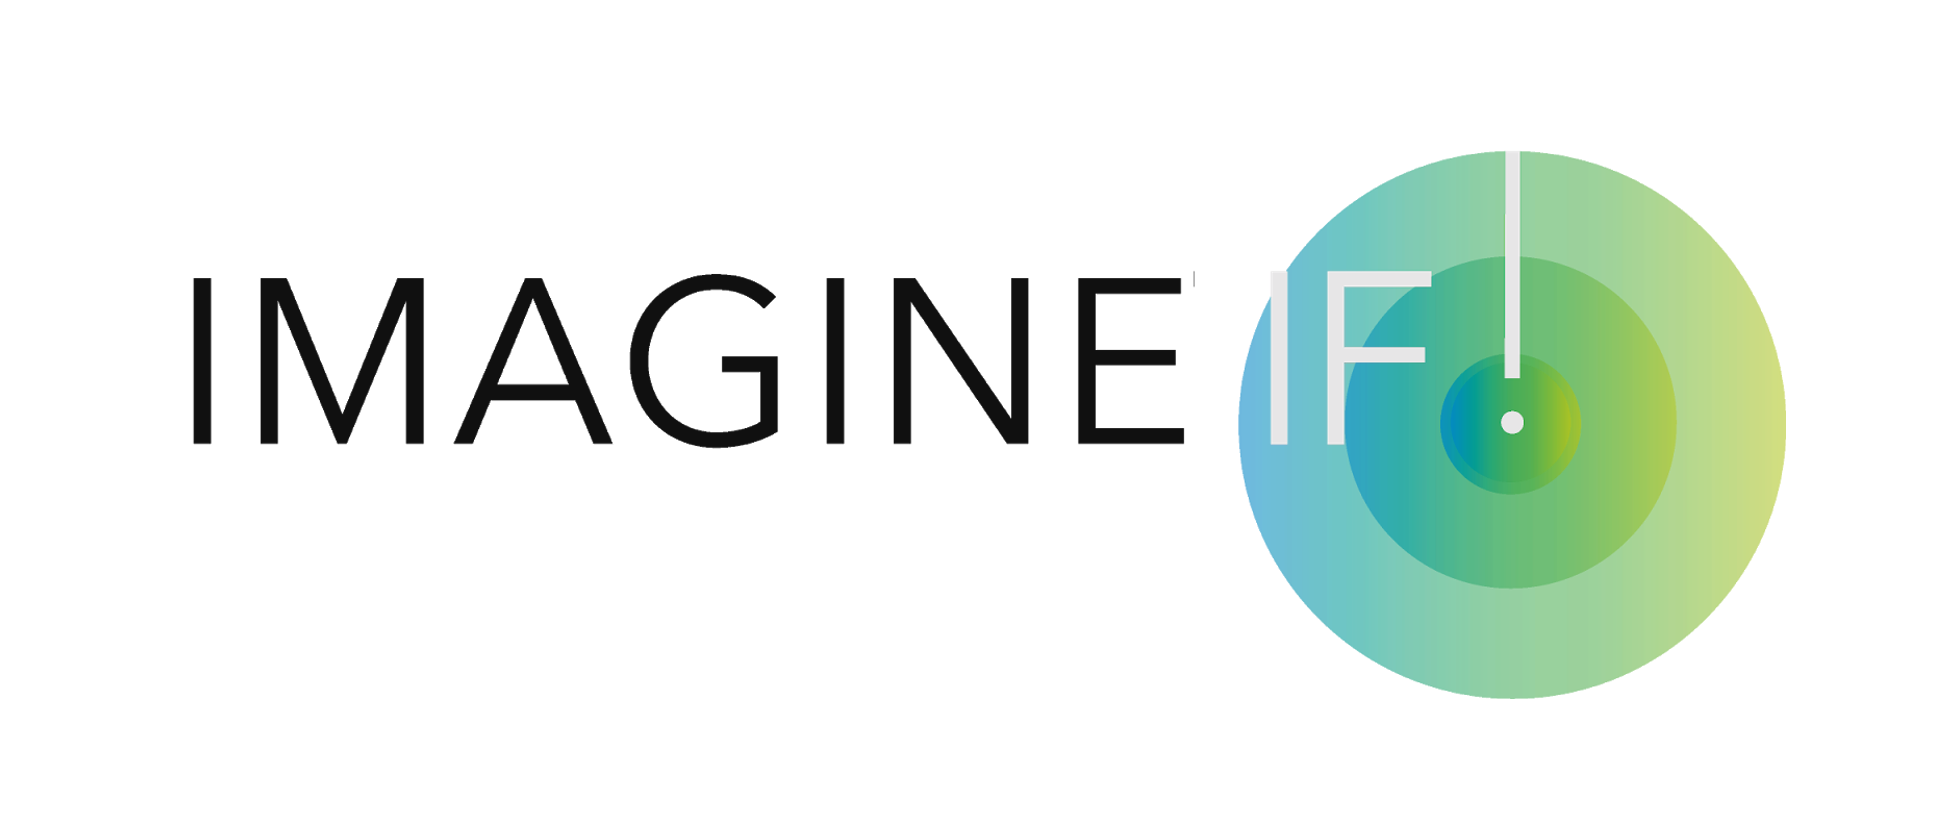 Imagine ru. Imagine(). Imagine making логотип. Imagine Lab фото логотипа. Логотип event Technology.